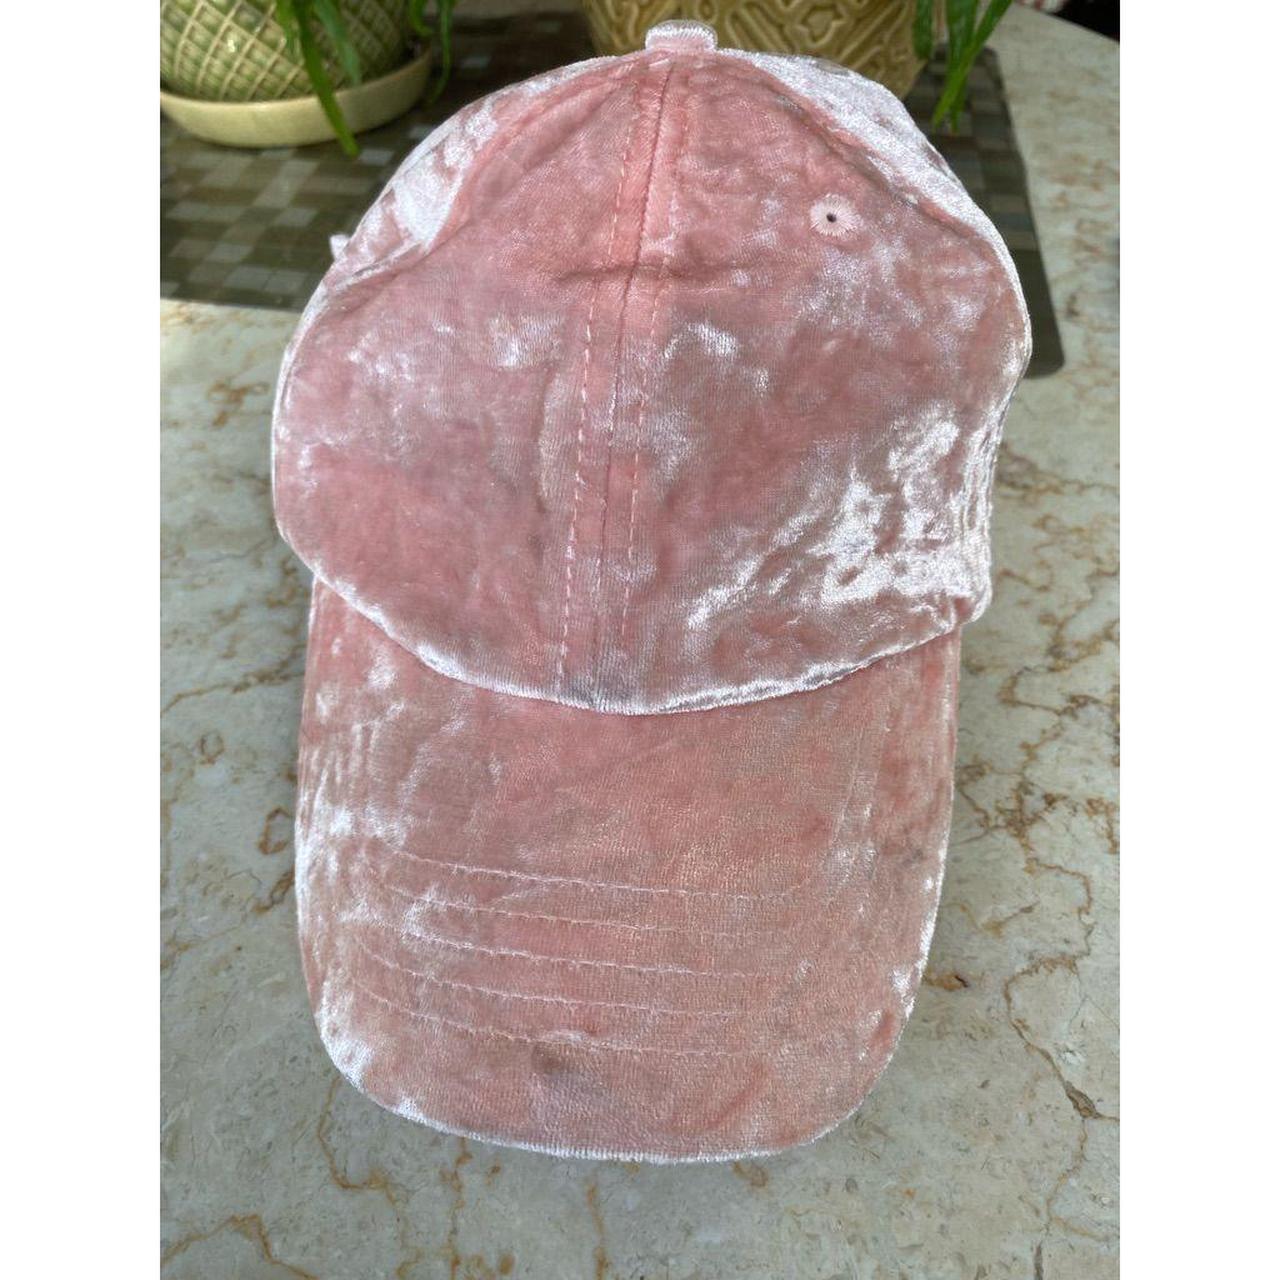 Product Image 1 - Pink velvet hat - lightly